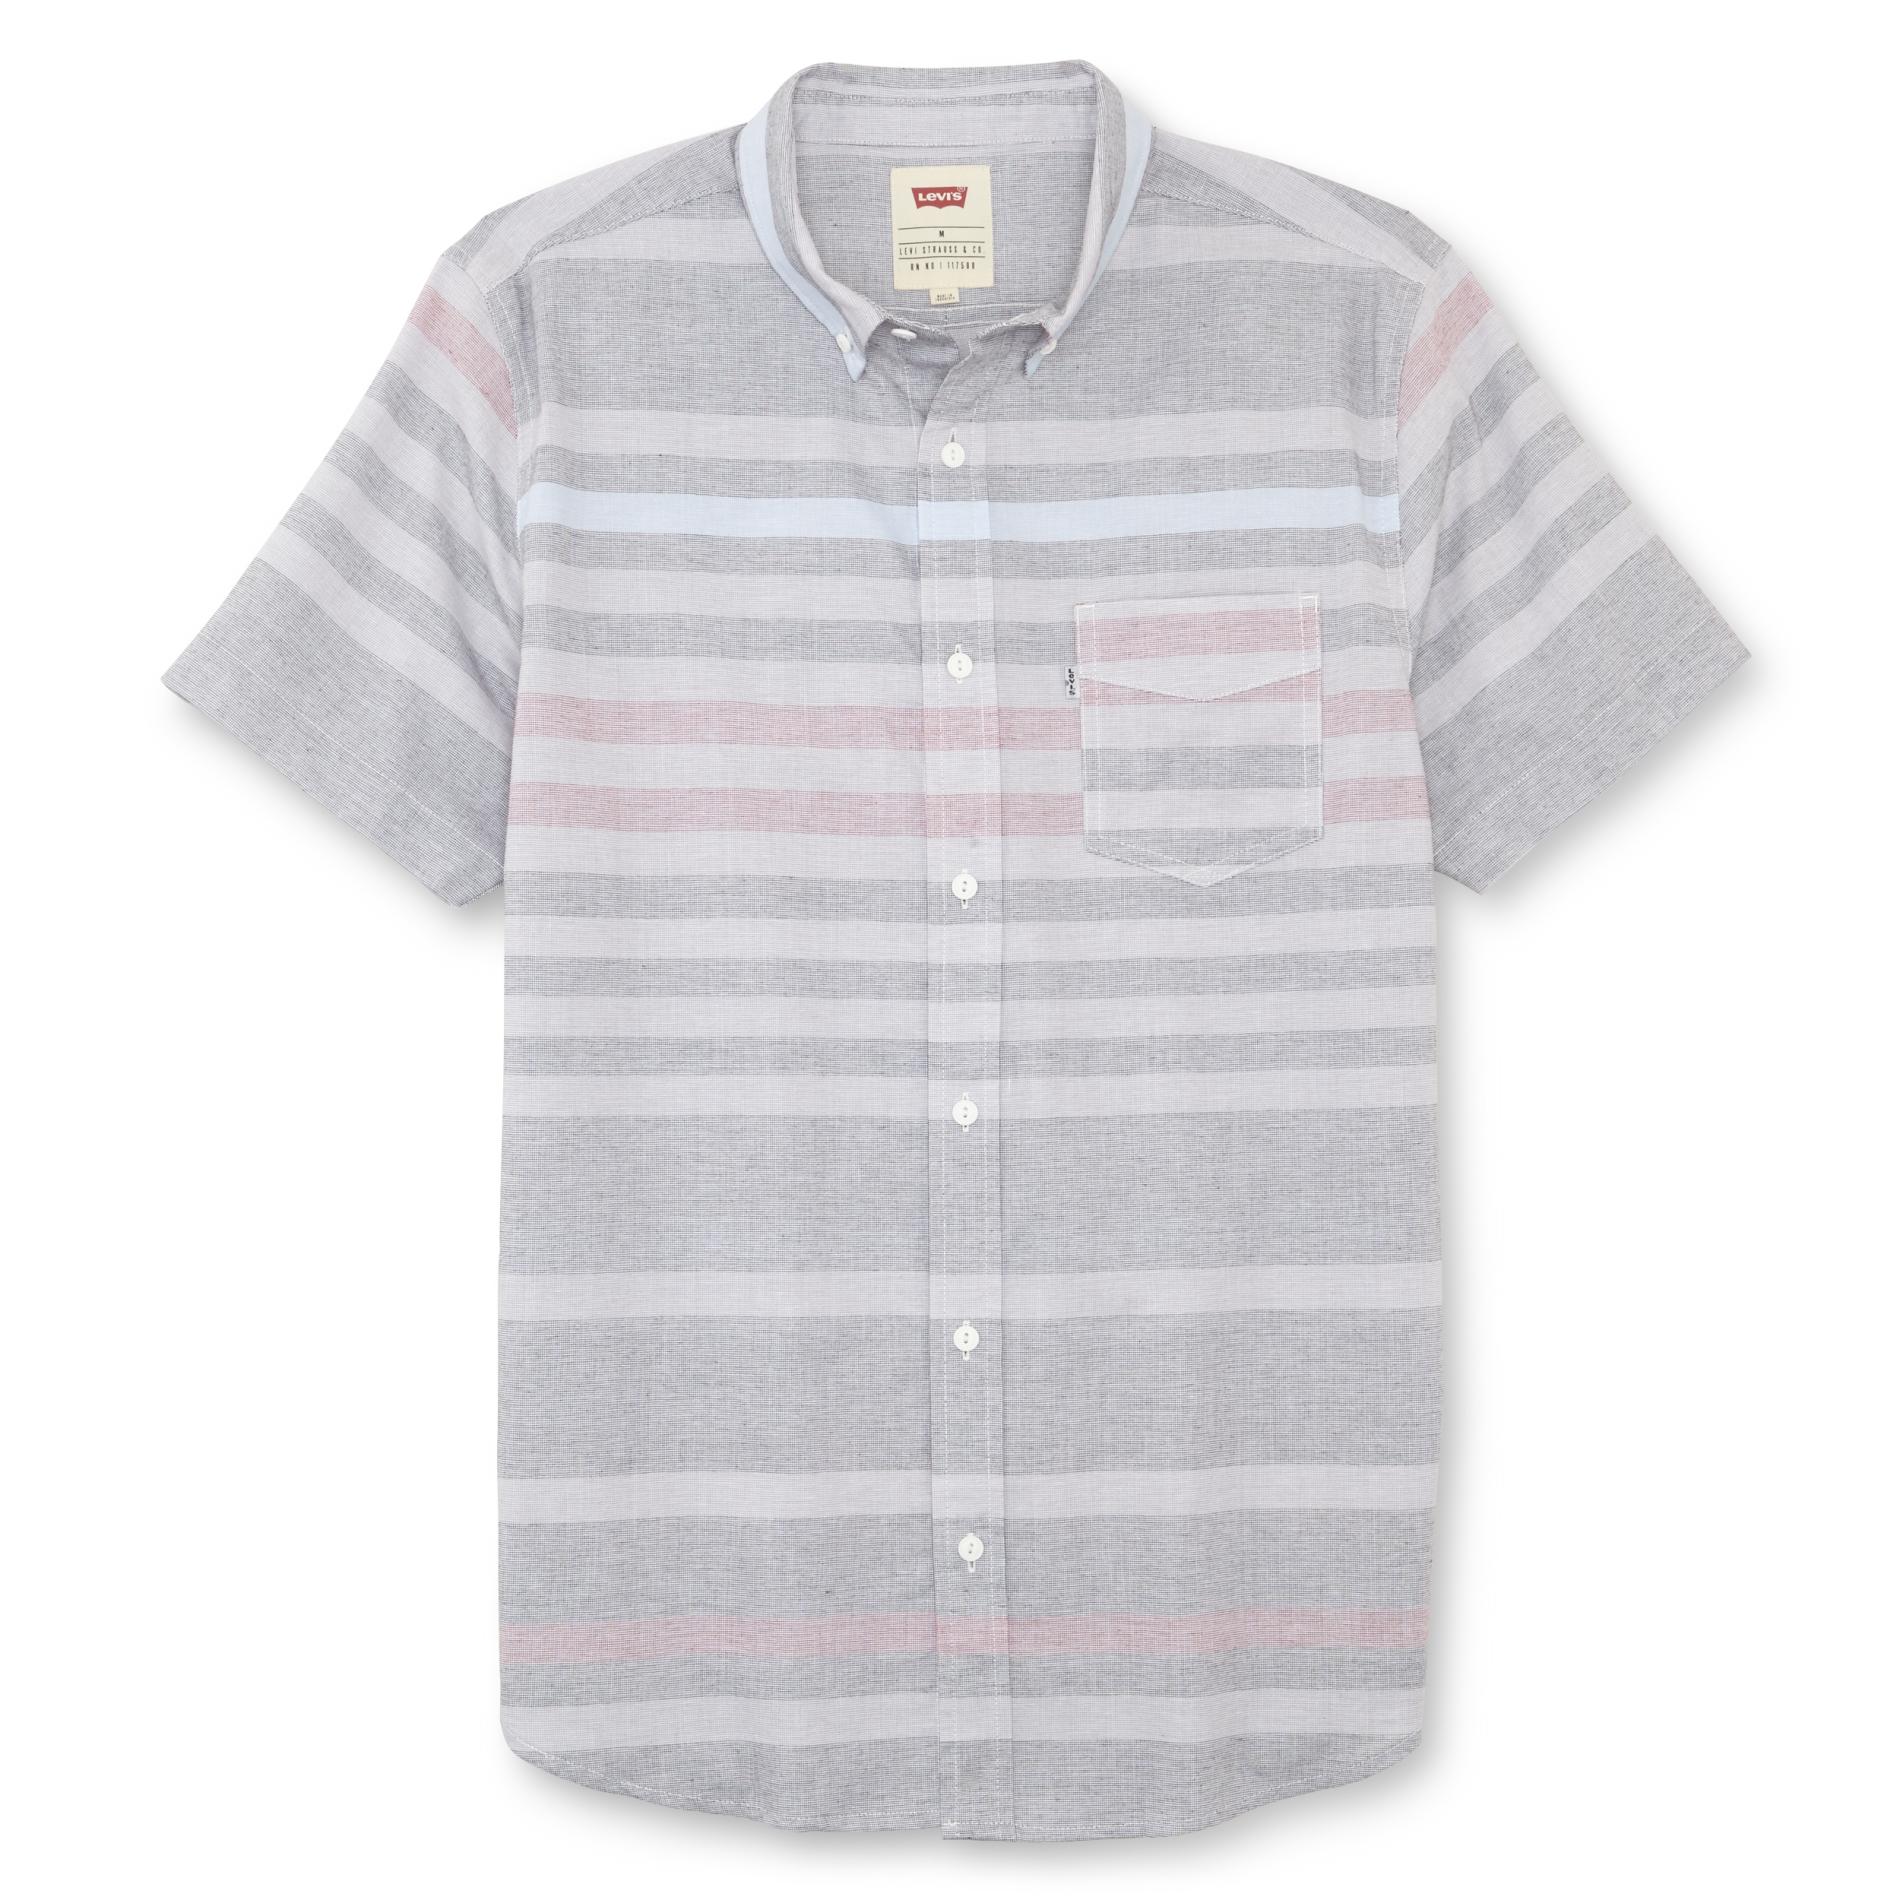 Levi's Men's Short-Sleeve Shirt - Striped